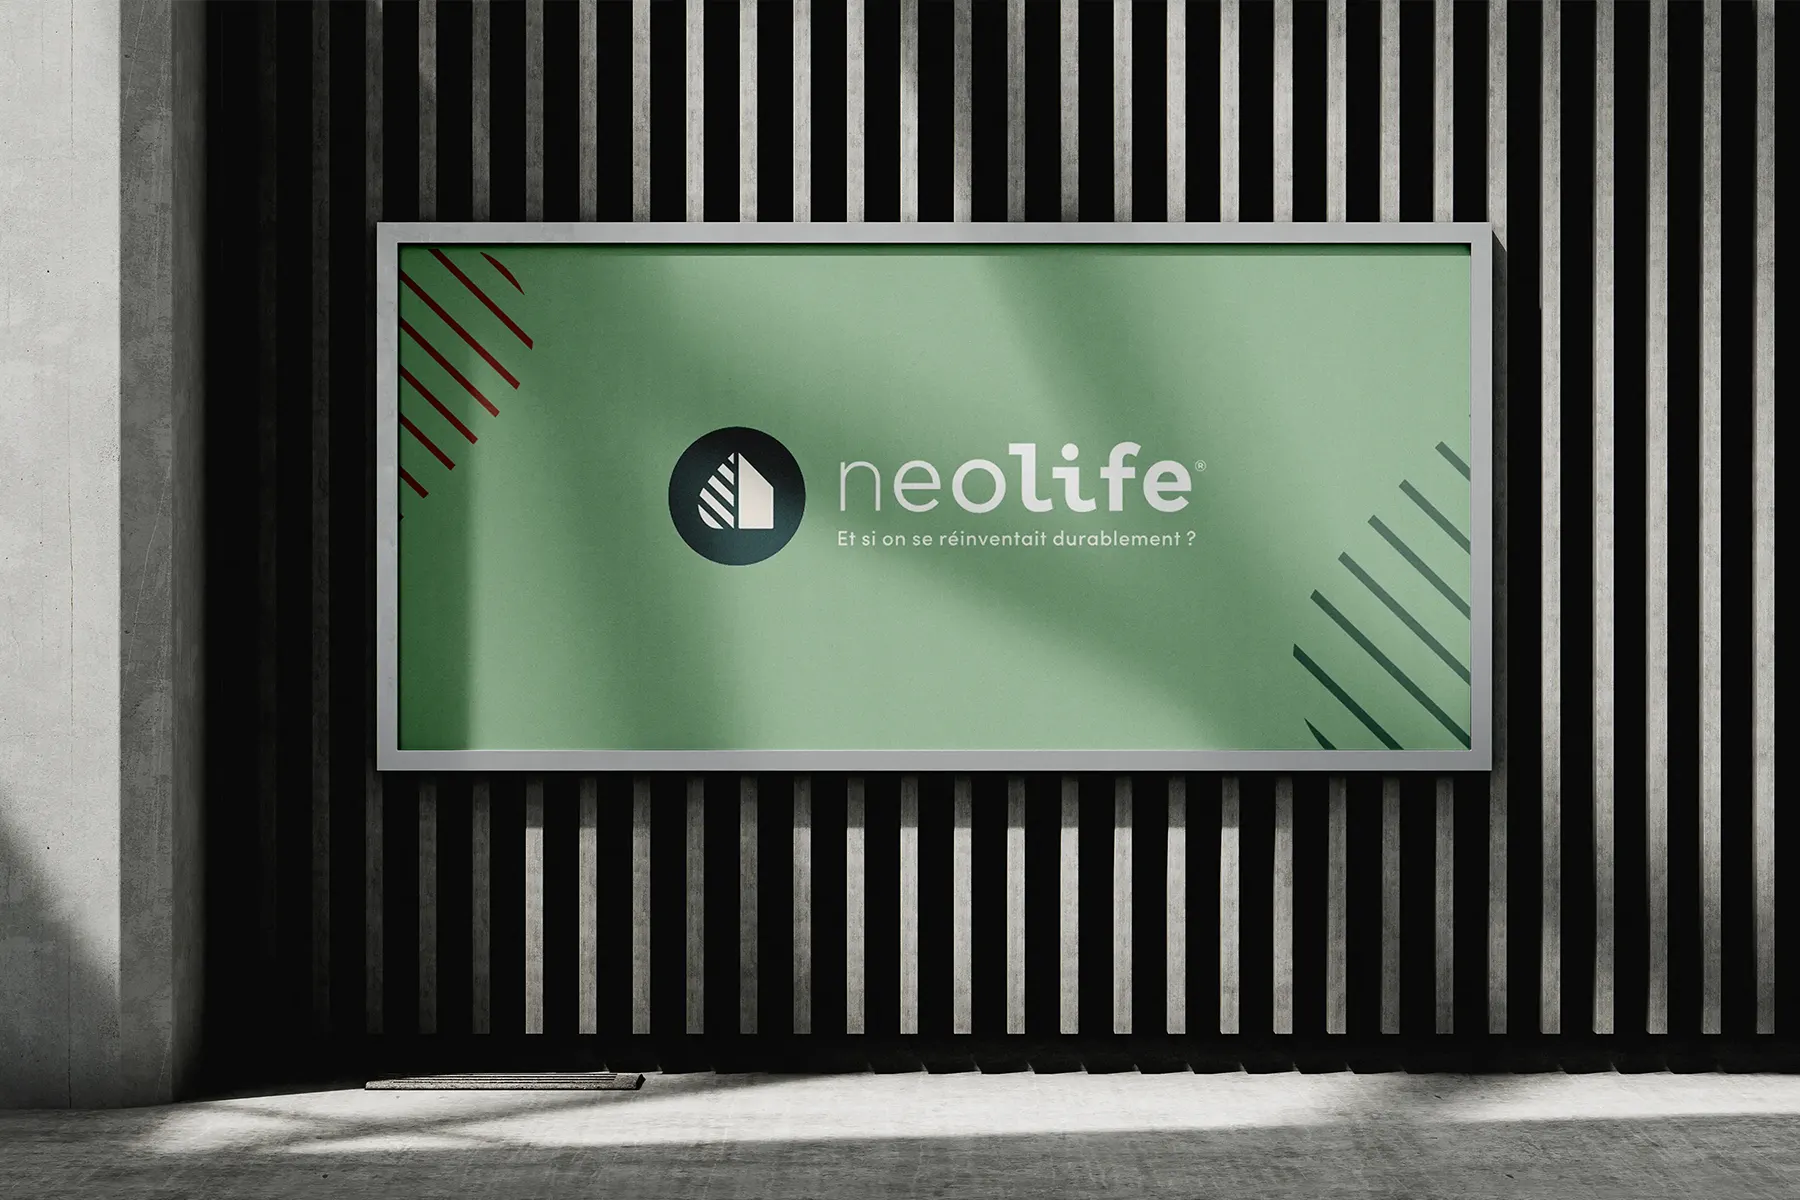 Projet pour Neolife : refonte identité visuelle, supports de communication, webdesign, packaging